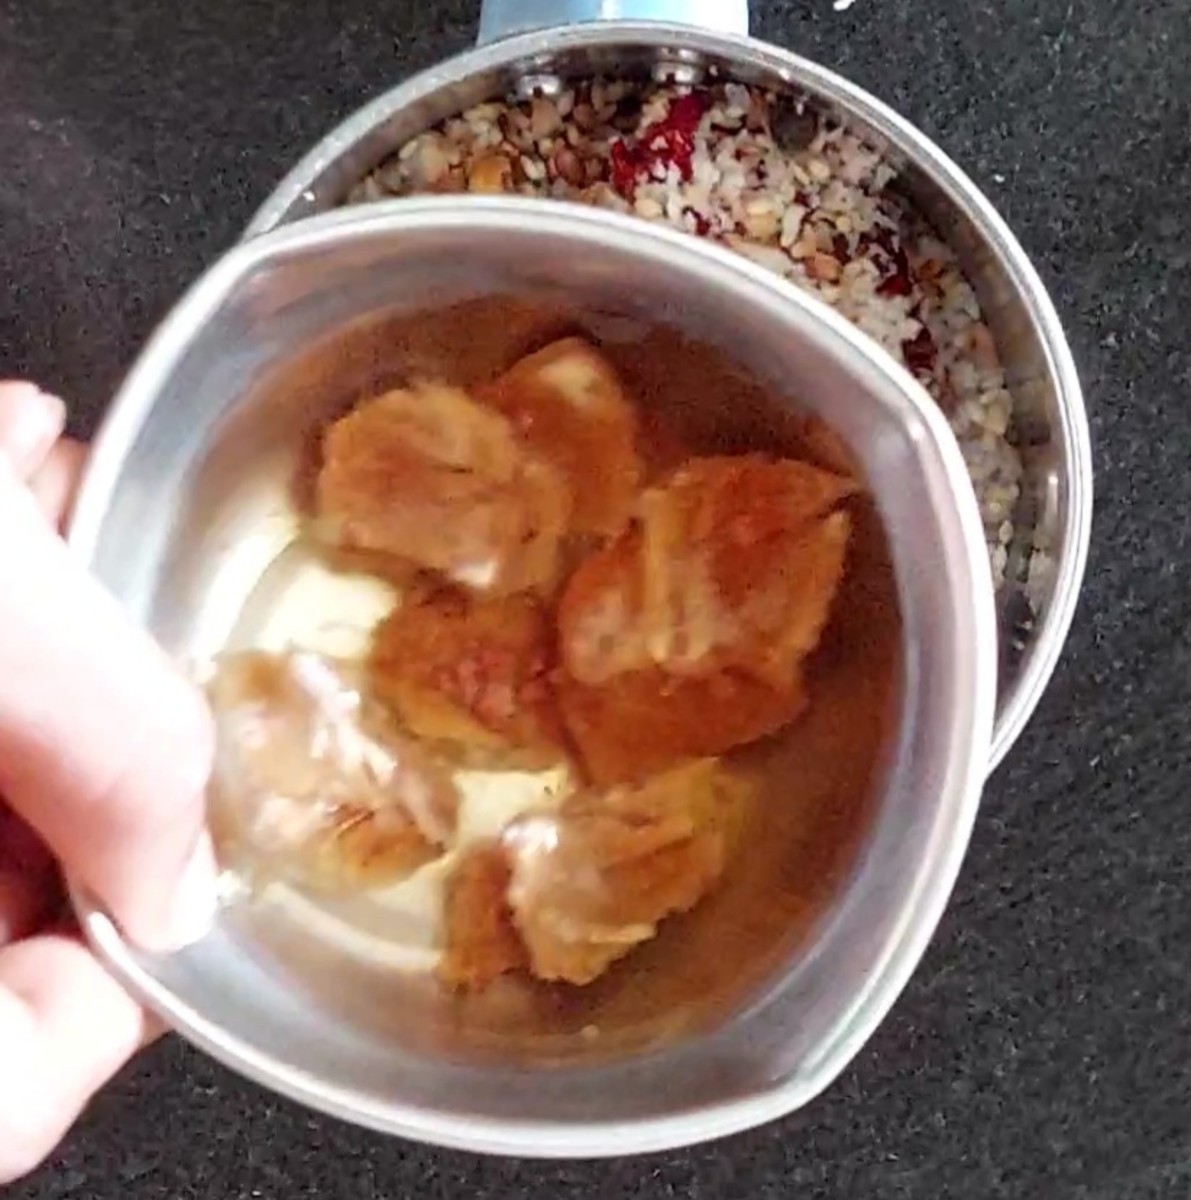 Add 1 tablespoon of soaked tamarind (or use tamarind paste).